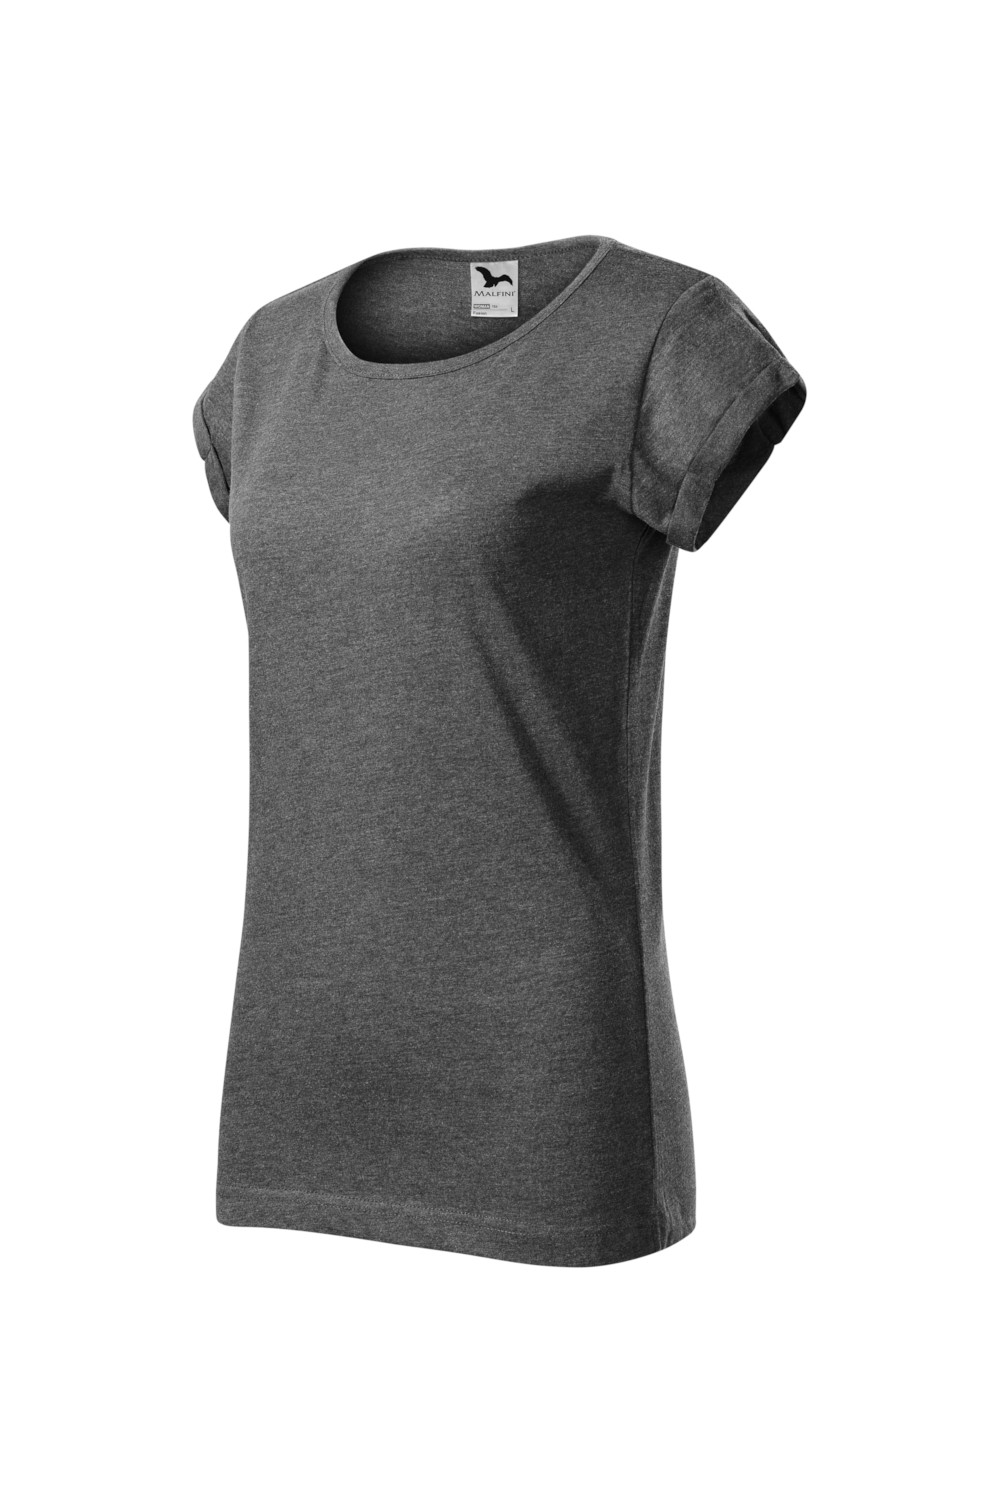 Koszulka damska melanżowa FUSION 164 koszulki / T-shirt czarny melanż M1